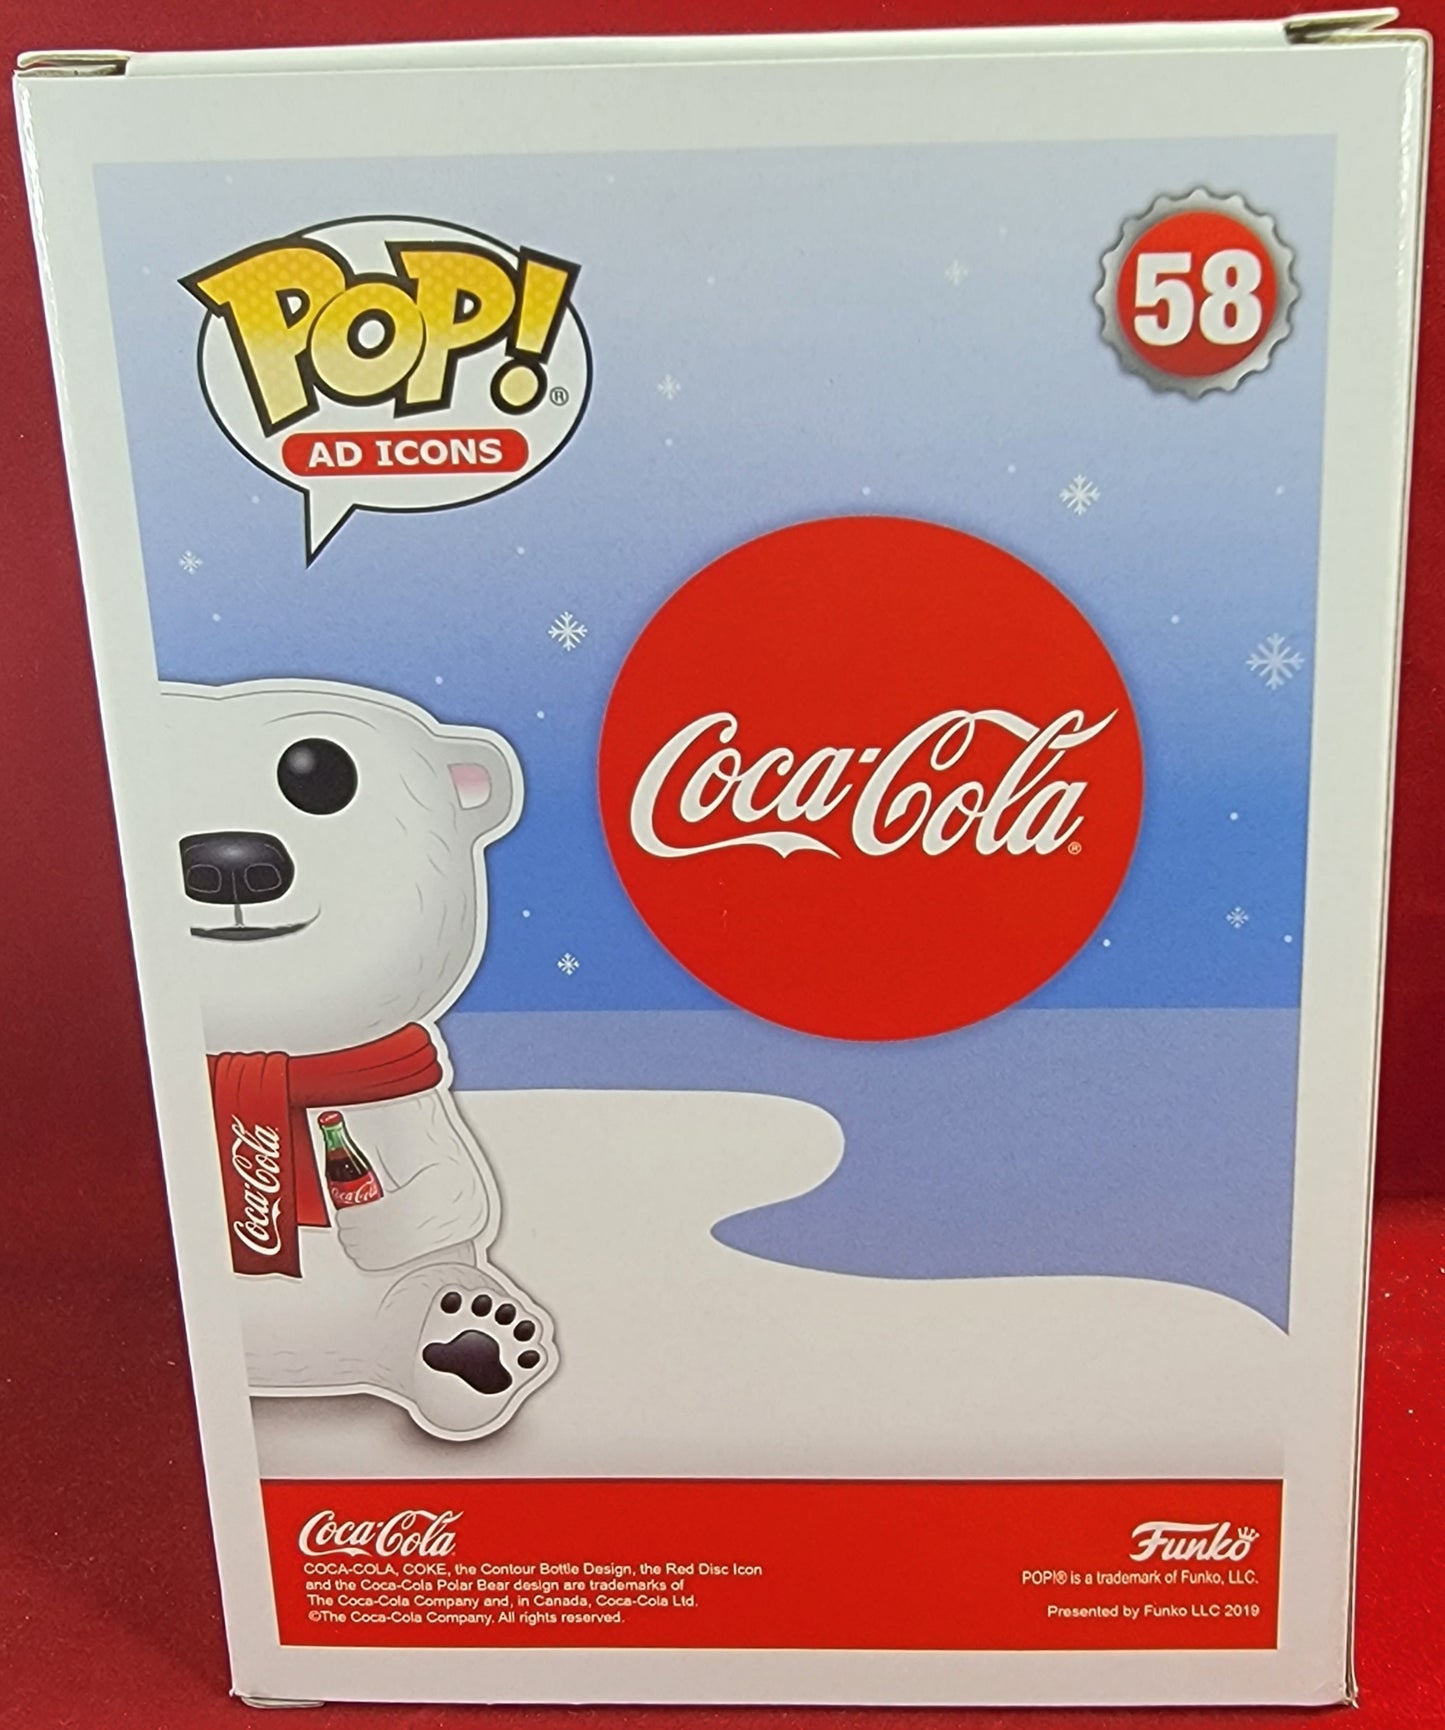 Coca-cola polar bear funko # 58 (nib)